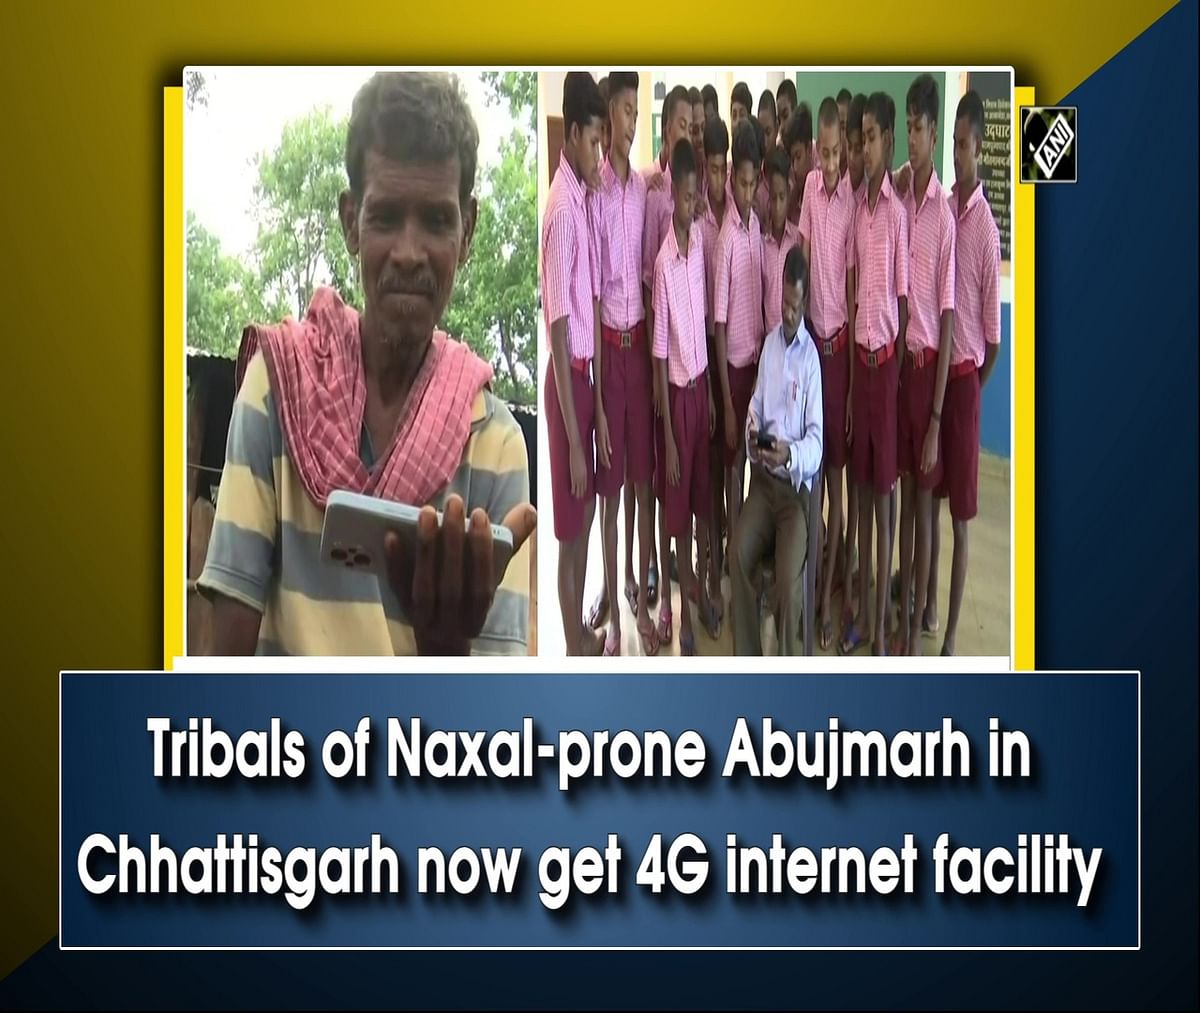 Tribals of Naxal-prone Abujmarh in Chhattisgarh now get 4G internet facility